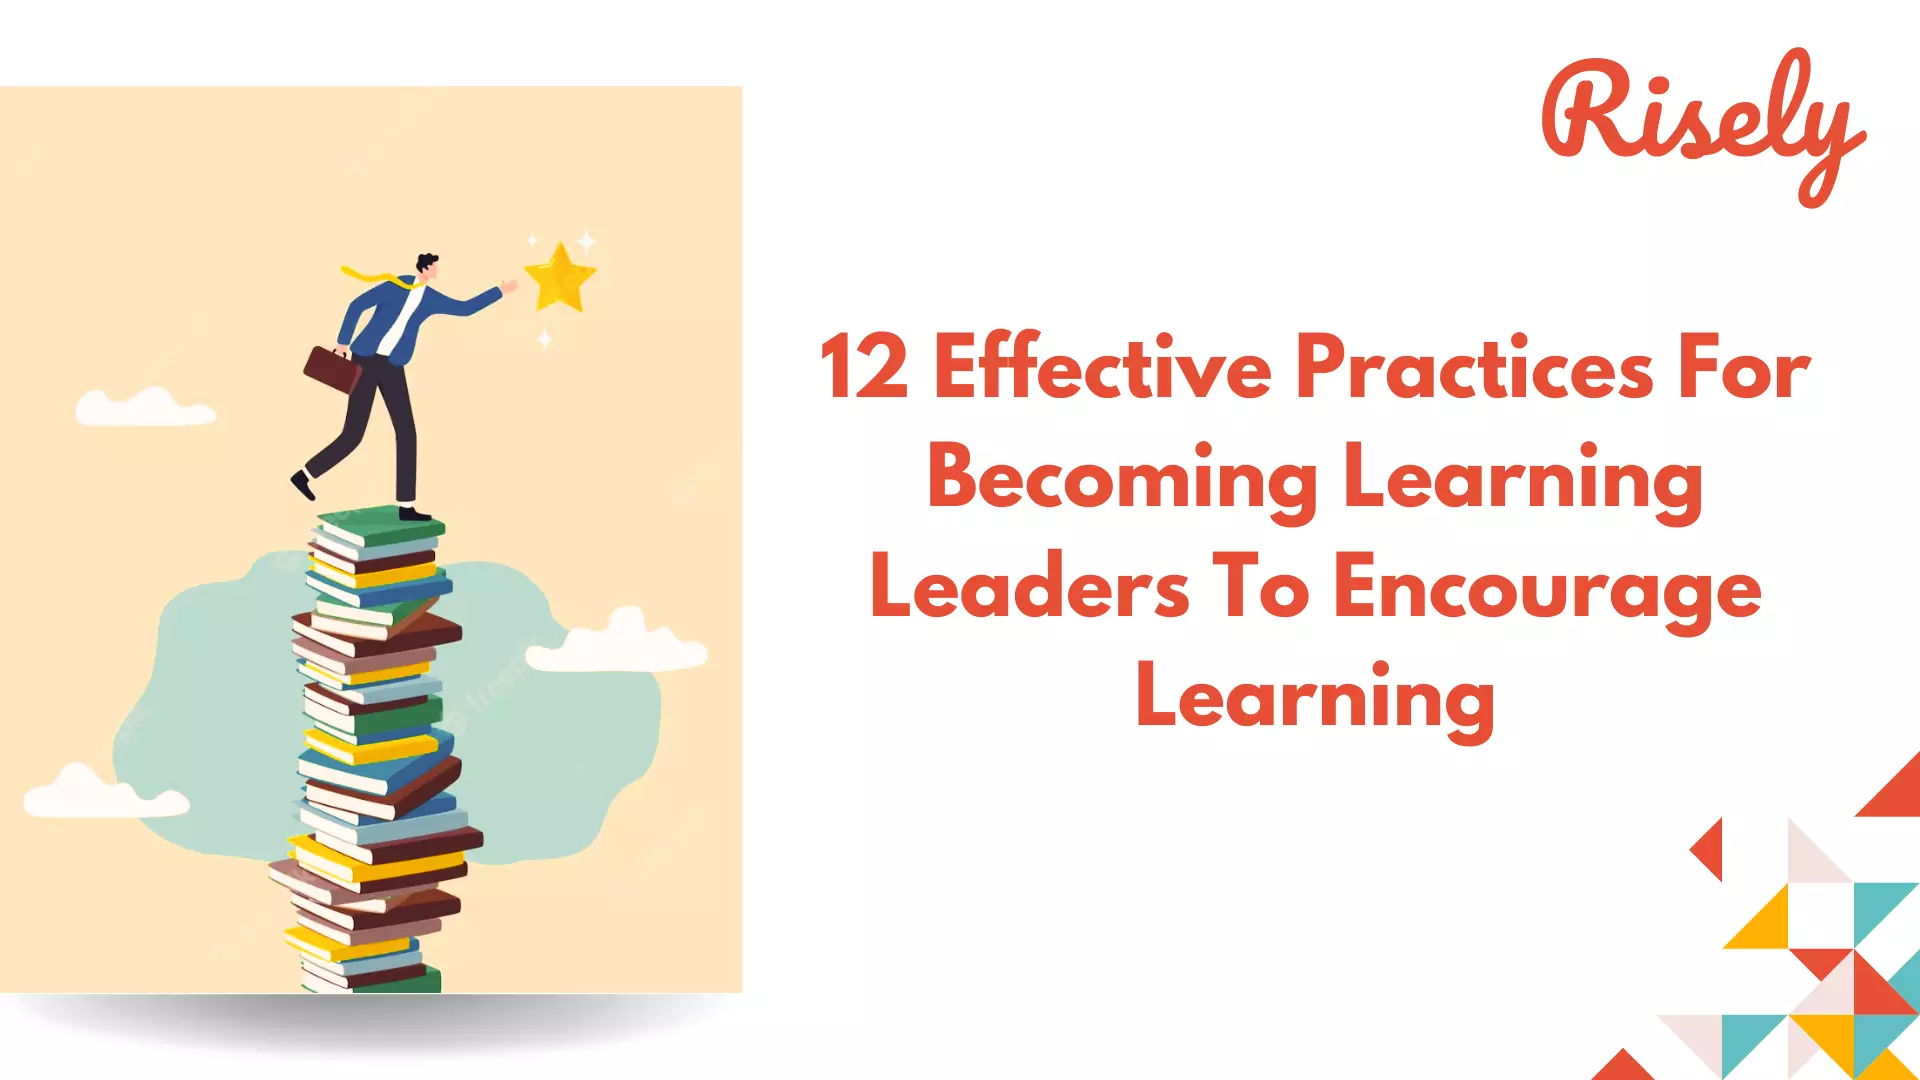 Learning leaders